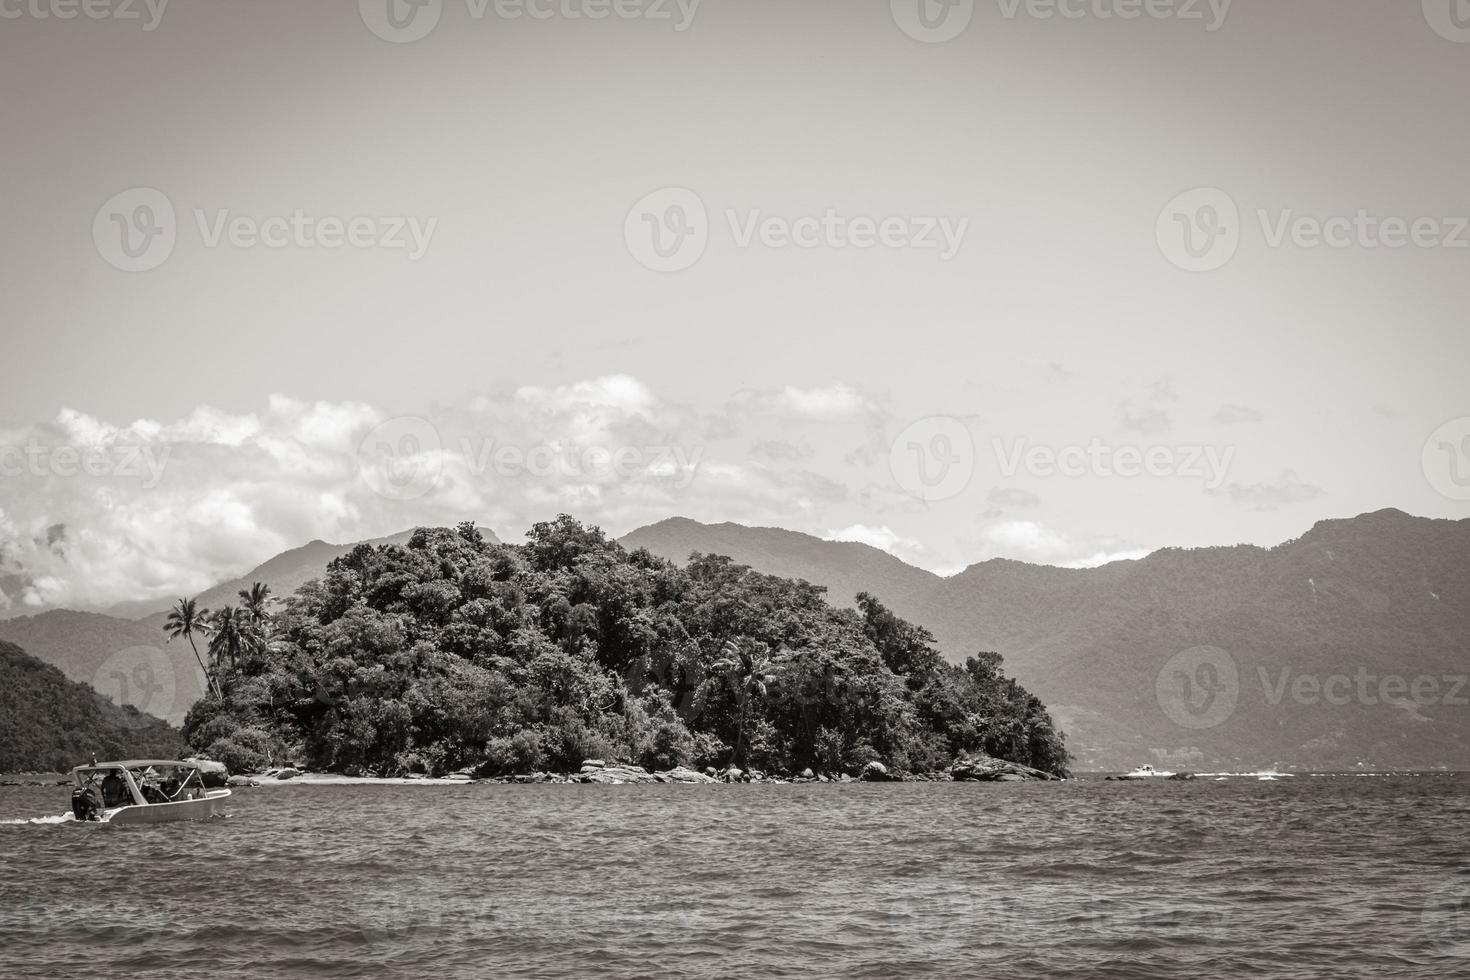 het grote tropische eiland ilha grande, angra dos reis brazilië. foto